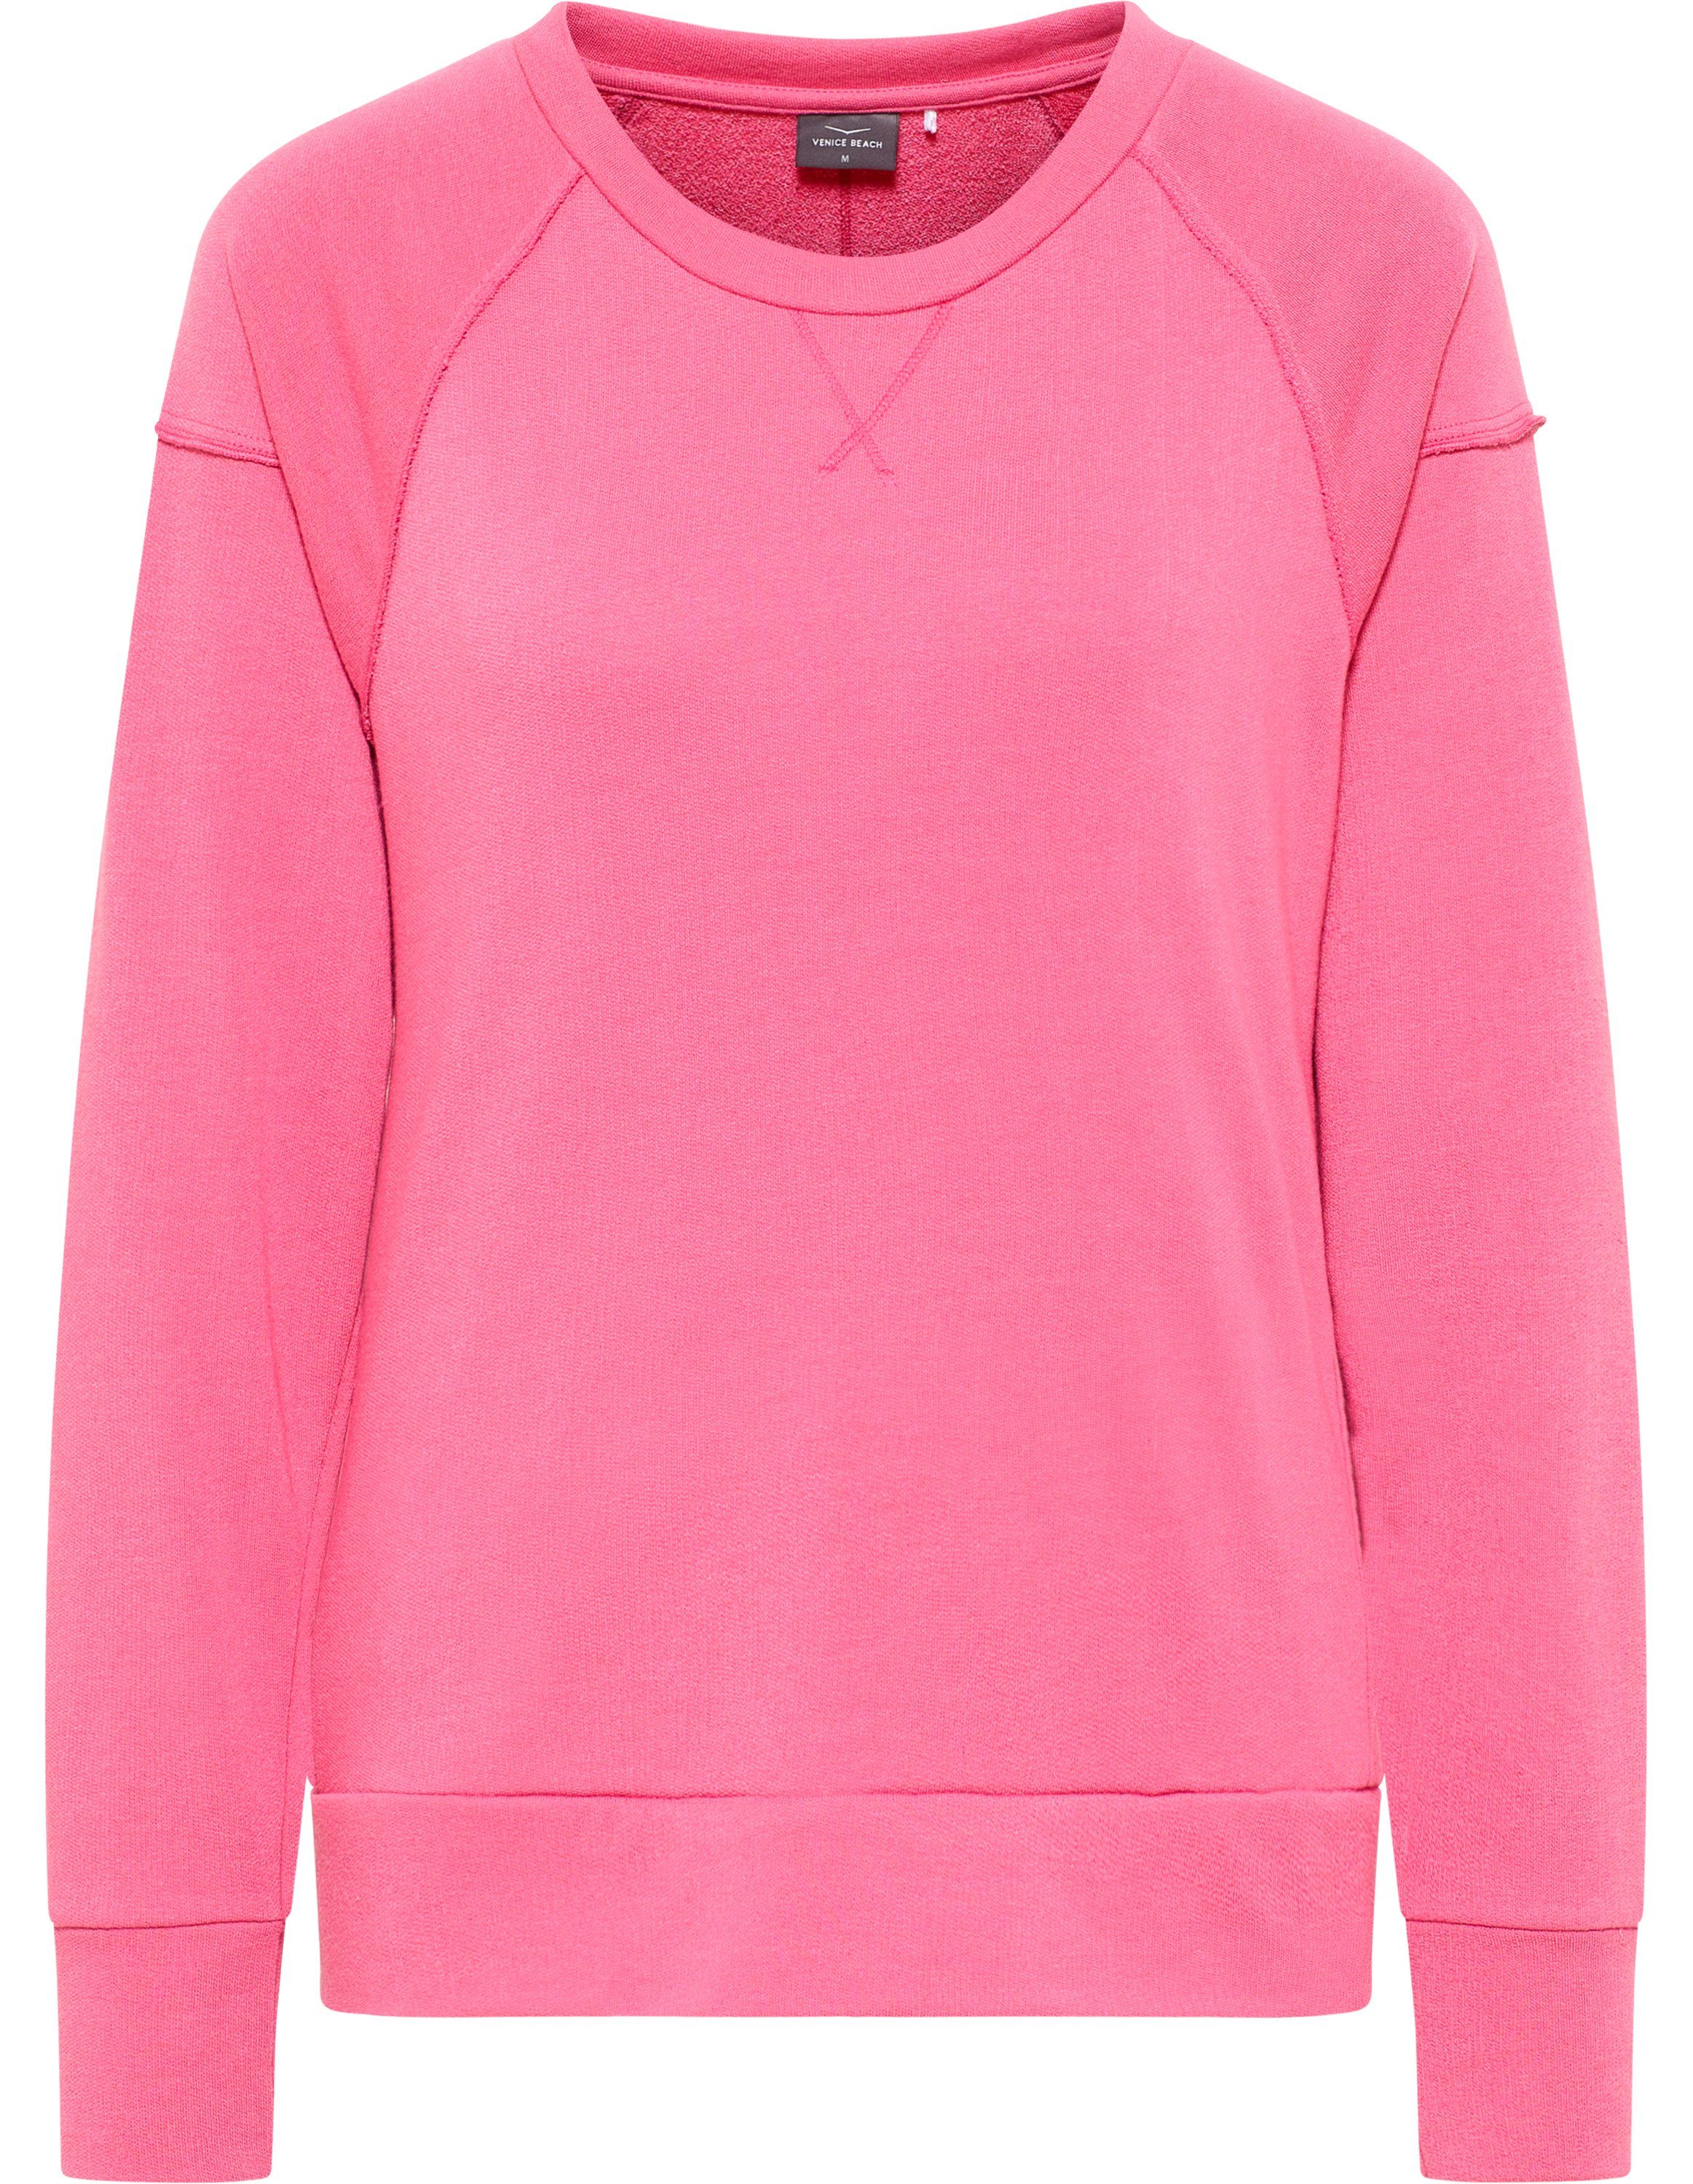 Venice Beach Sweatshirt Sweatshirt VB FRANCIE pink sky | Sweatshirts